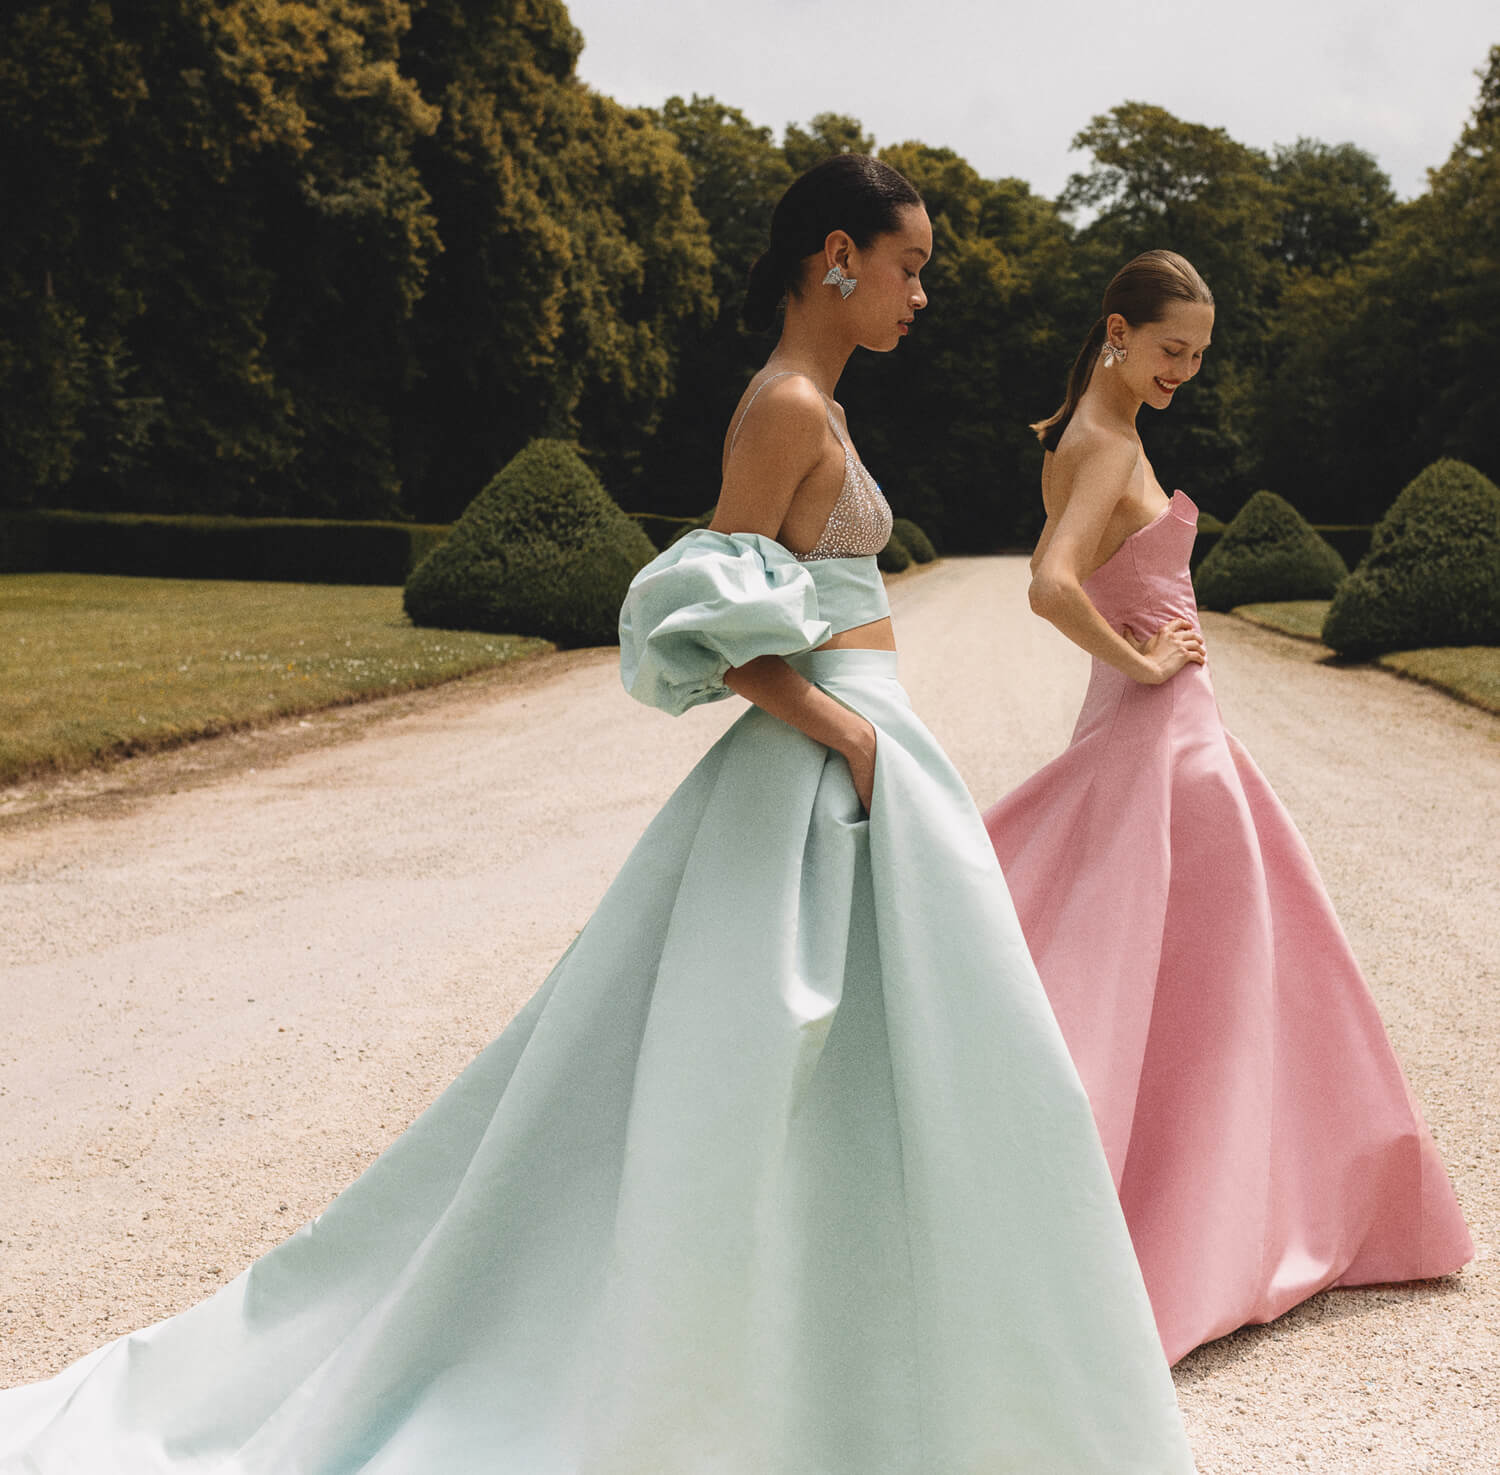 Coloured wedding dresses - Bridal gowns - Leah S Designs